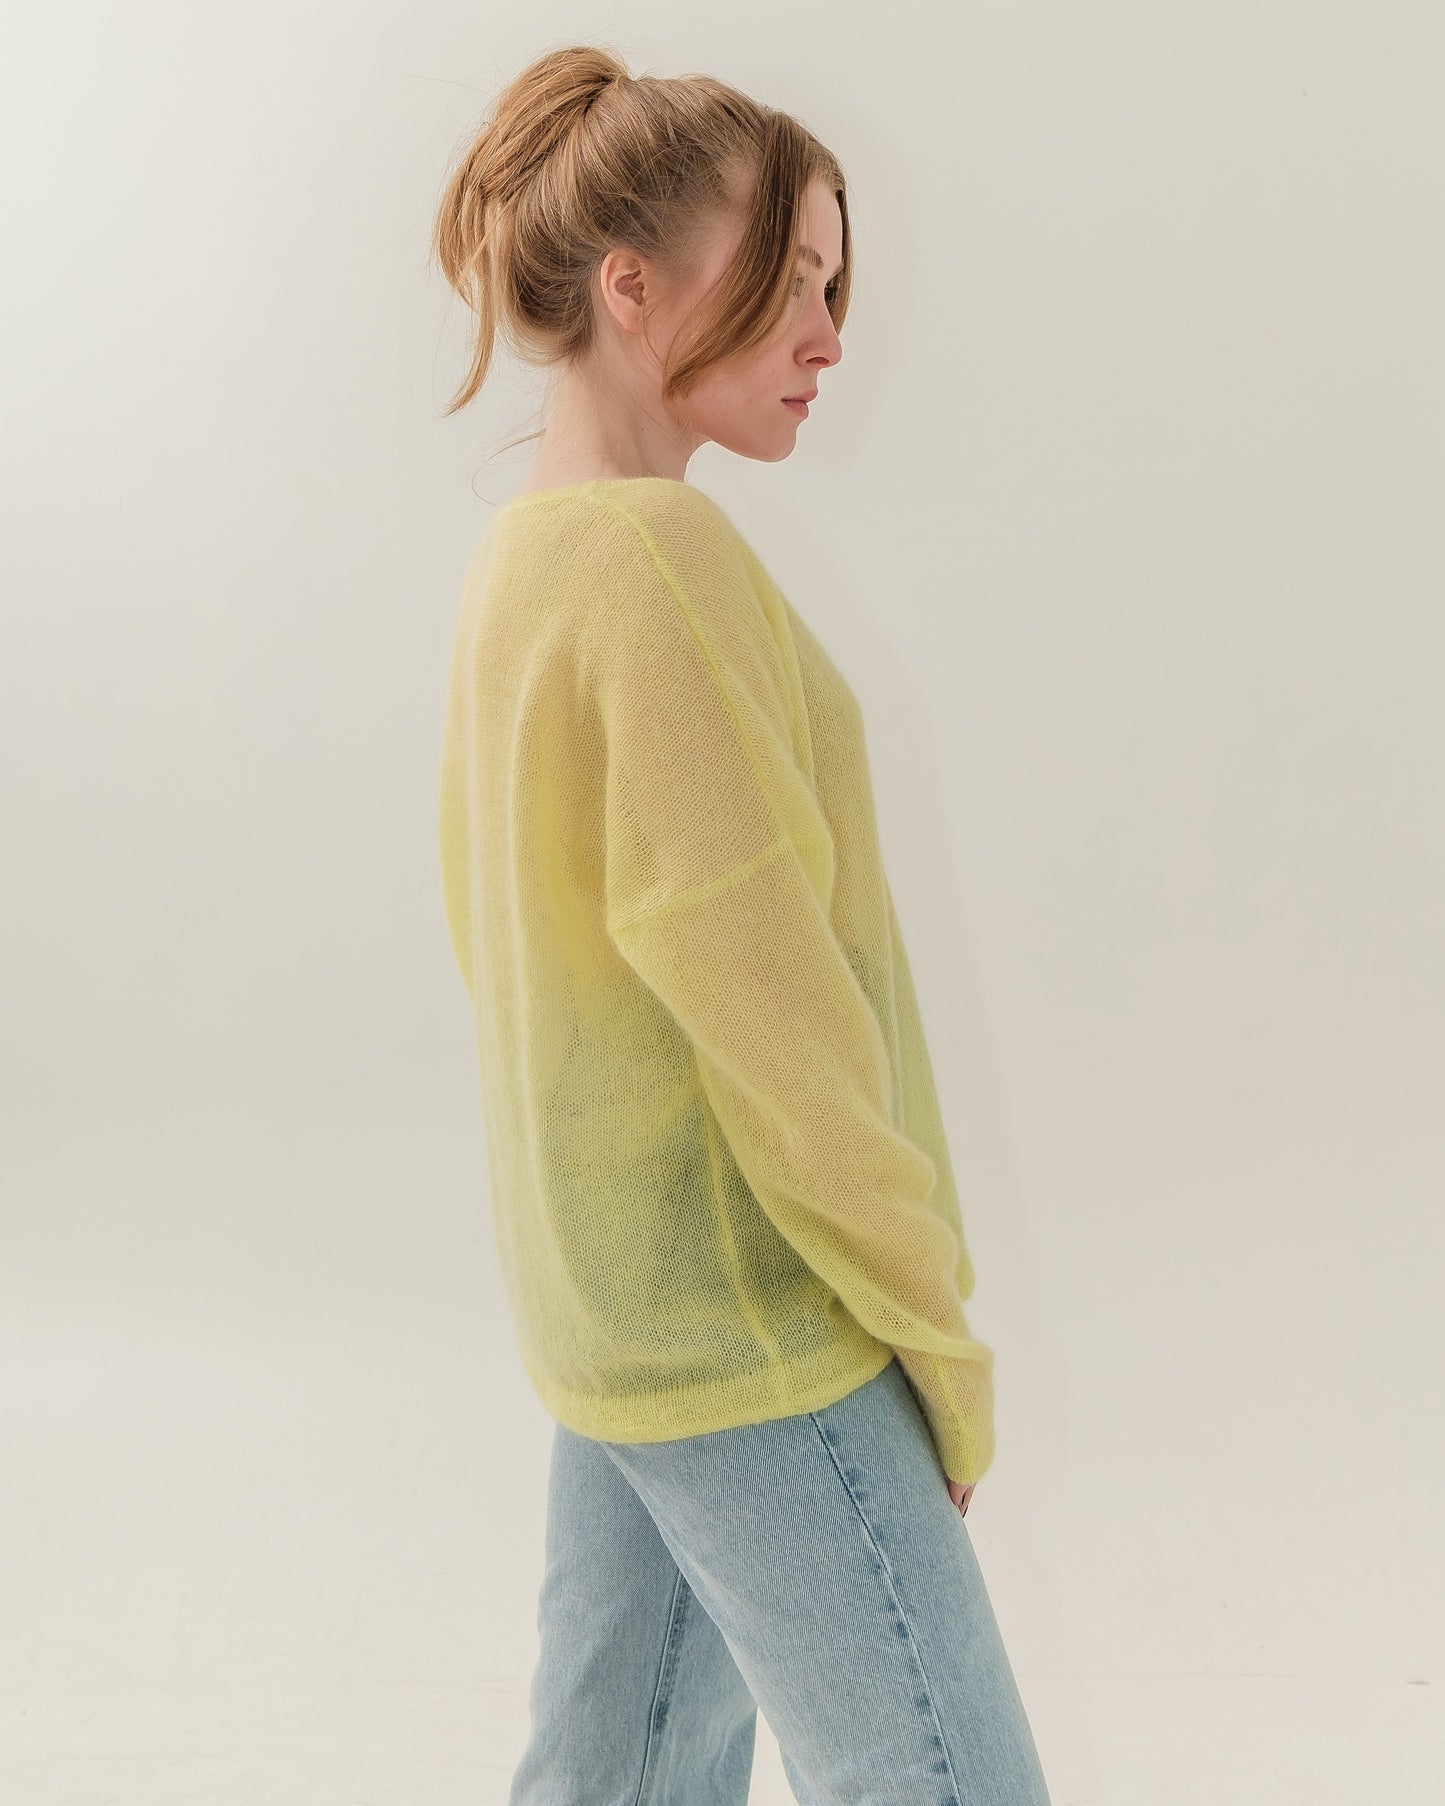 Lightweight sweater in yellow